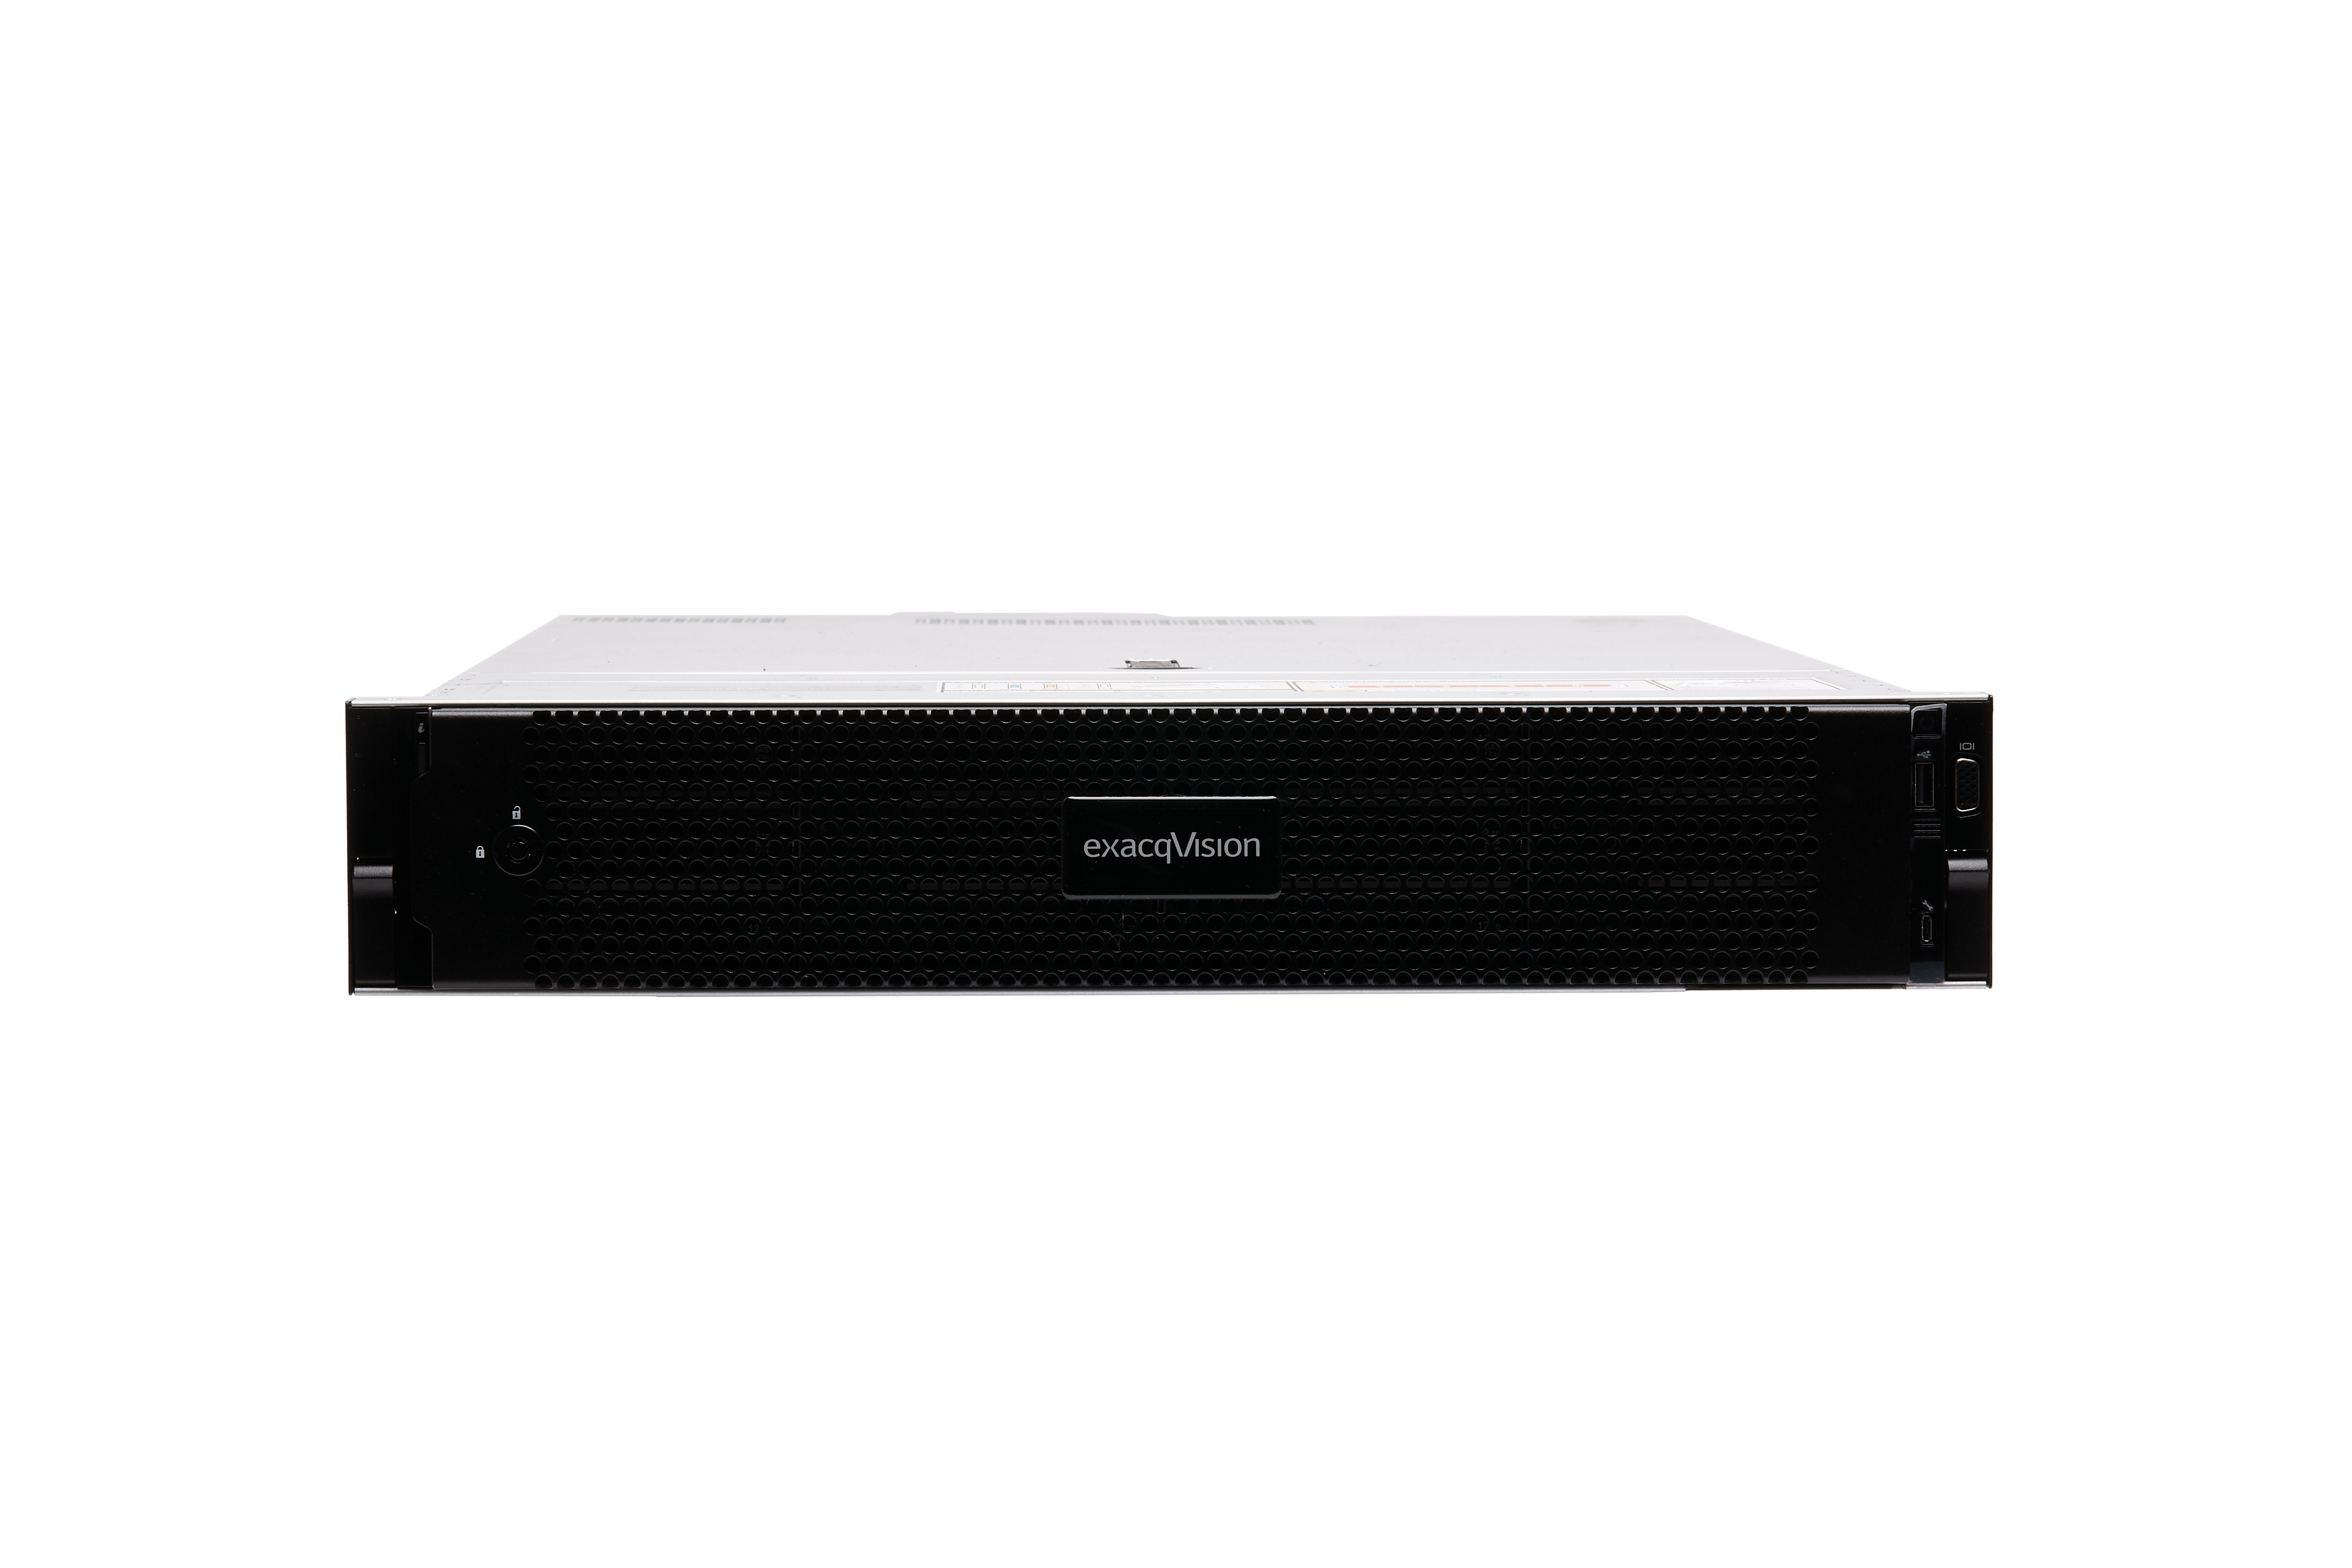 exacqVision X-Series 2U video server